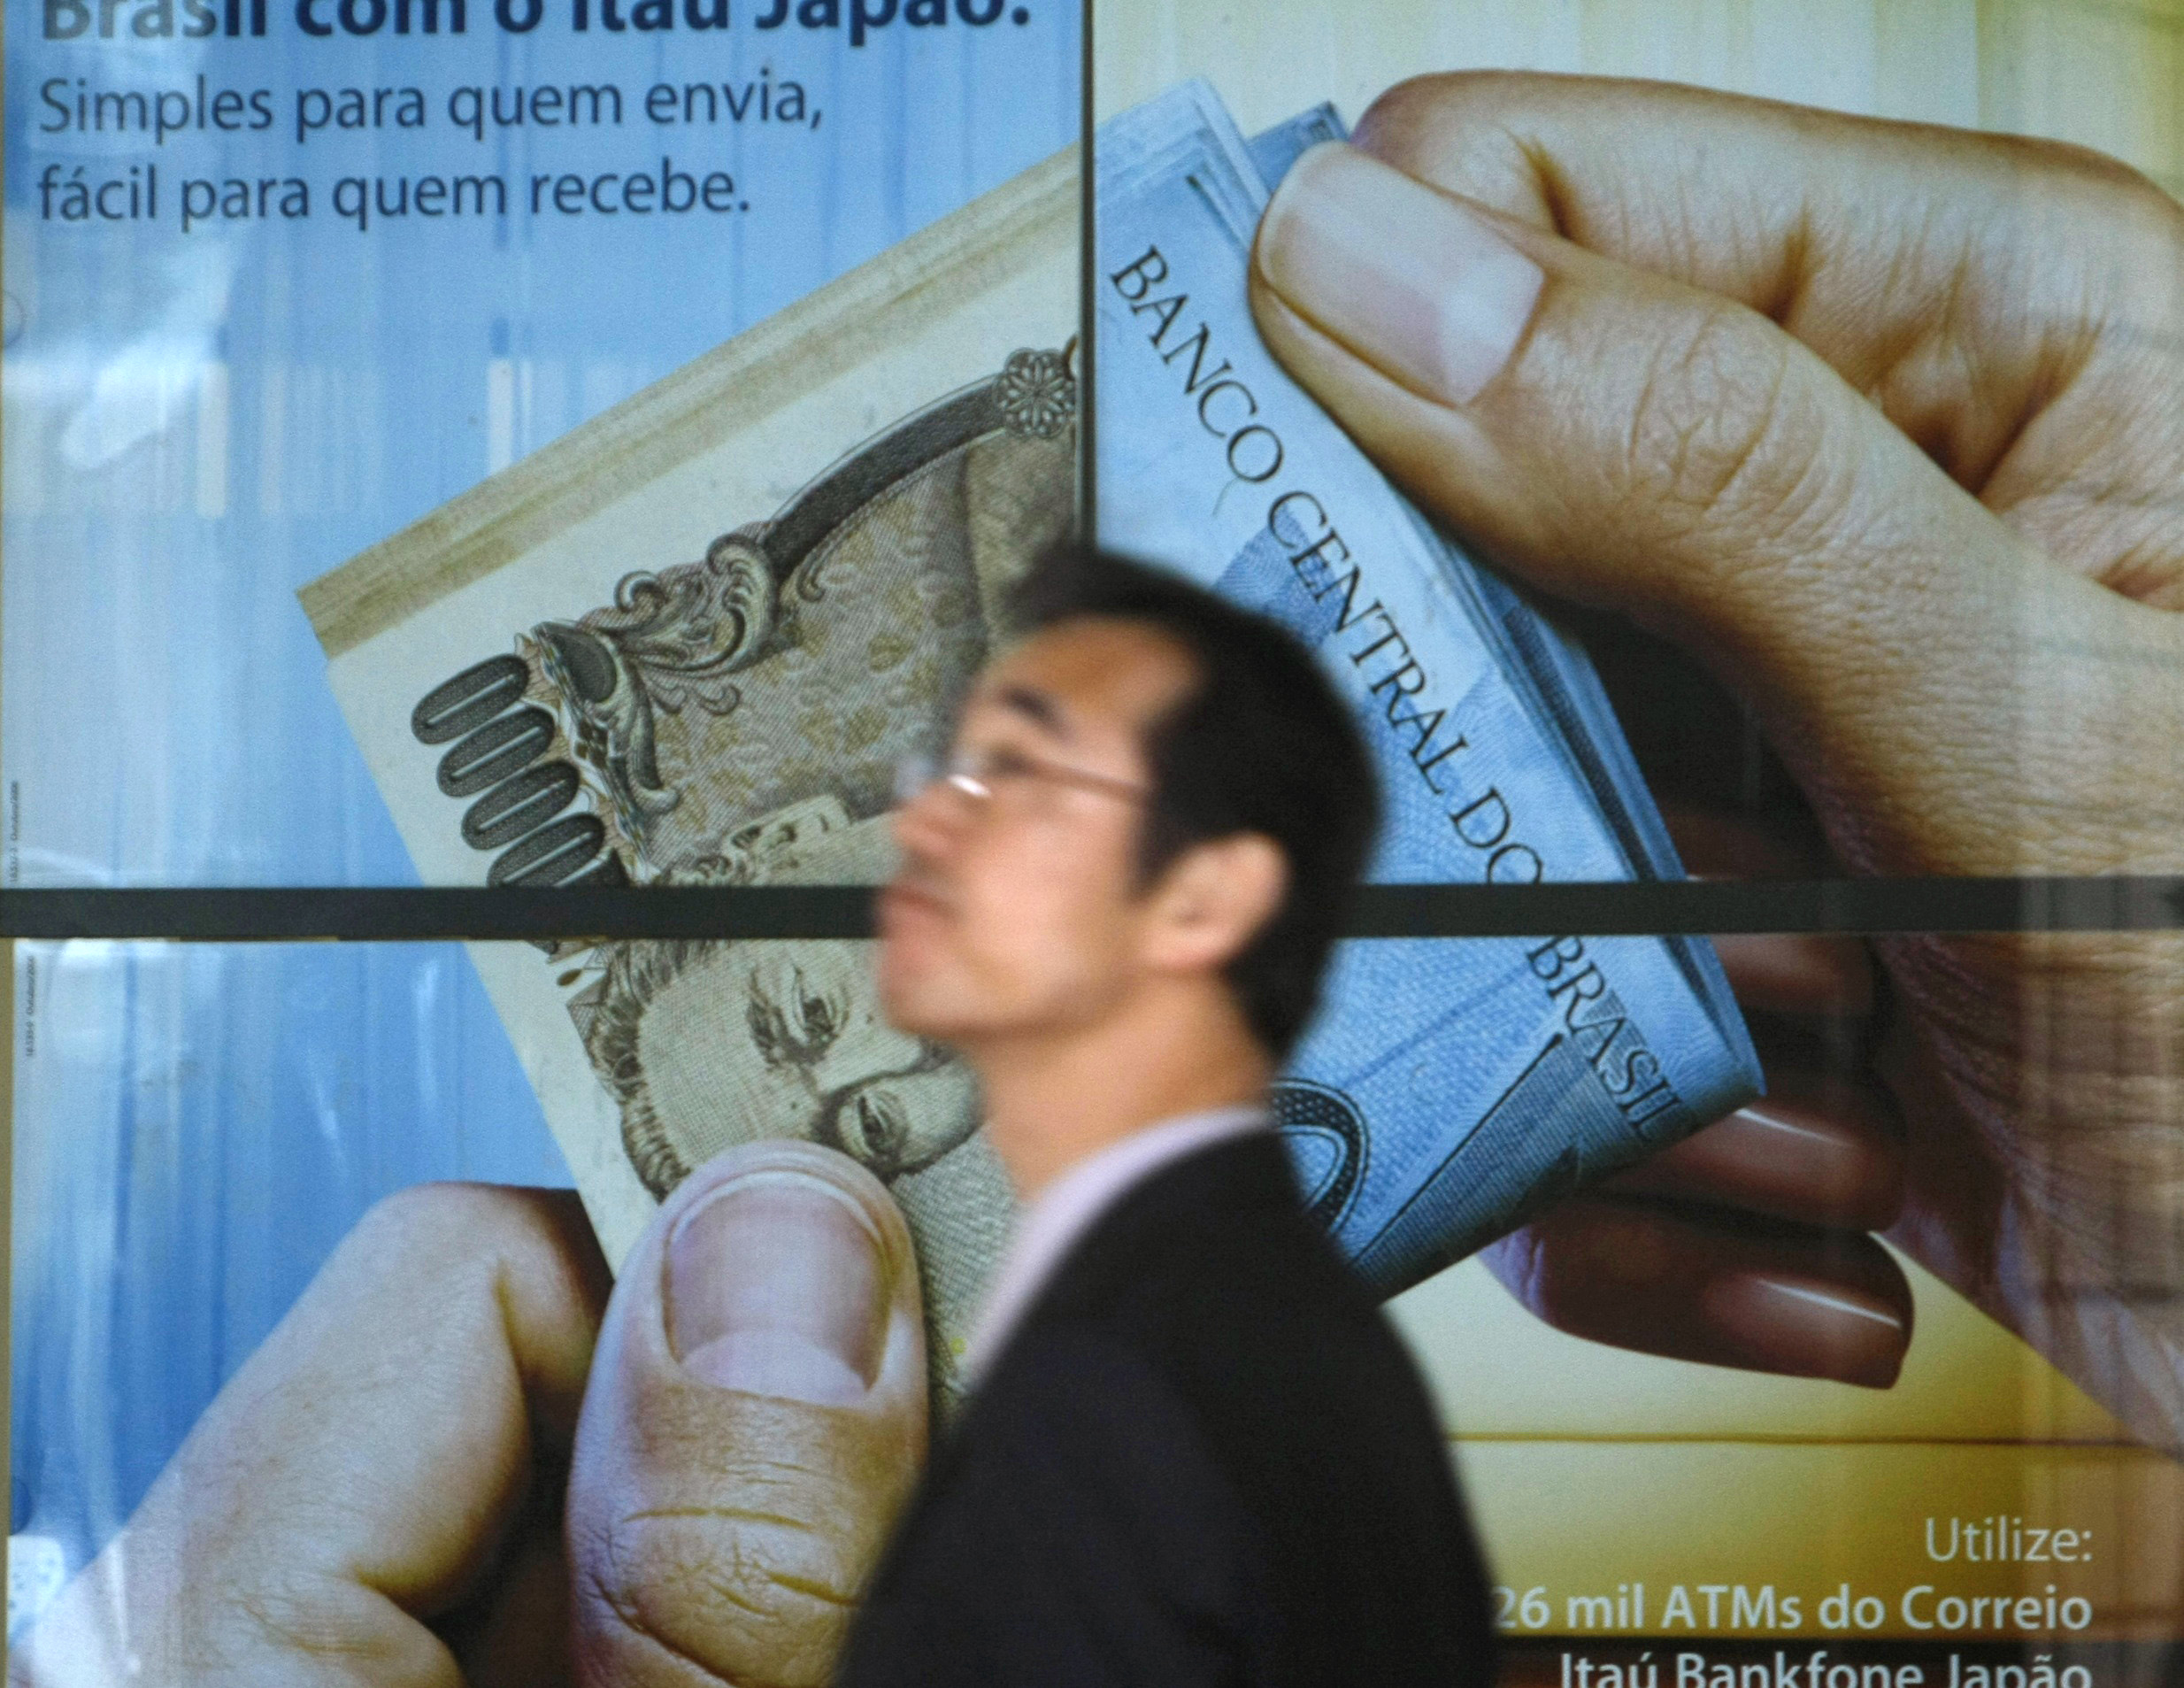 Asian monetary crisis